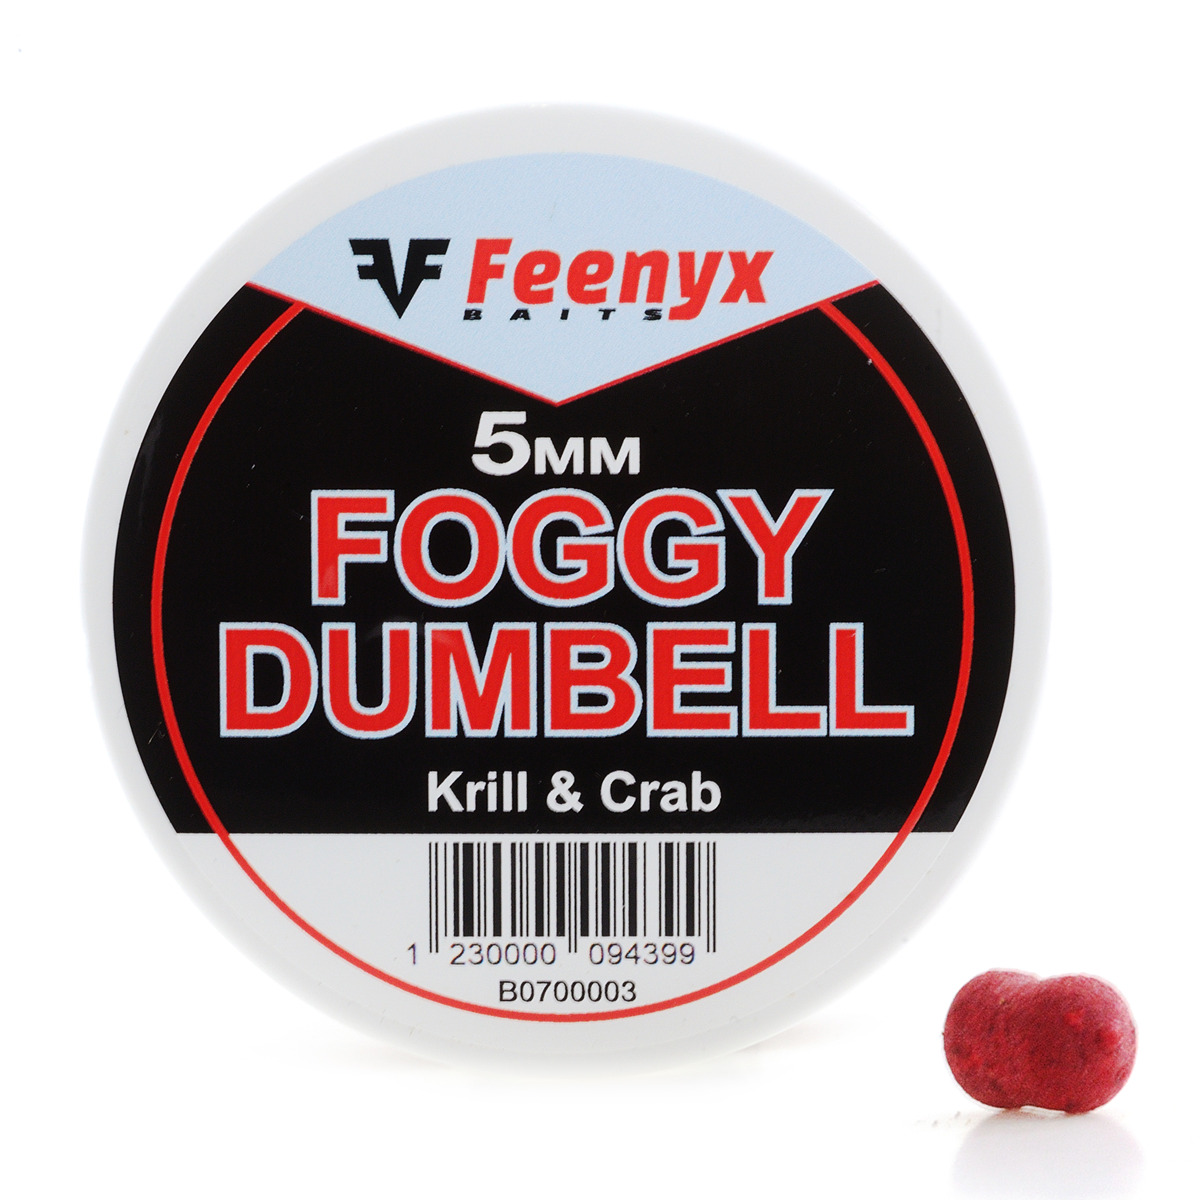 Feenyx Foggy Dumbell Krill & Crab - 5 mm